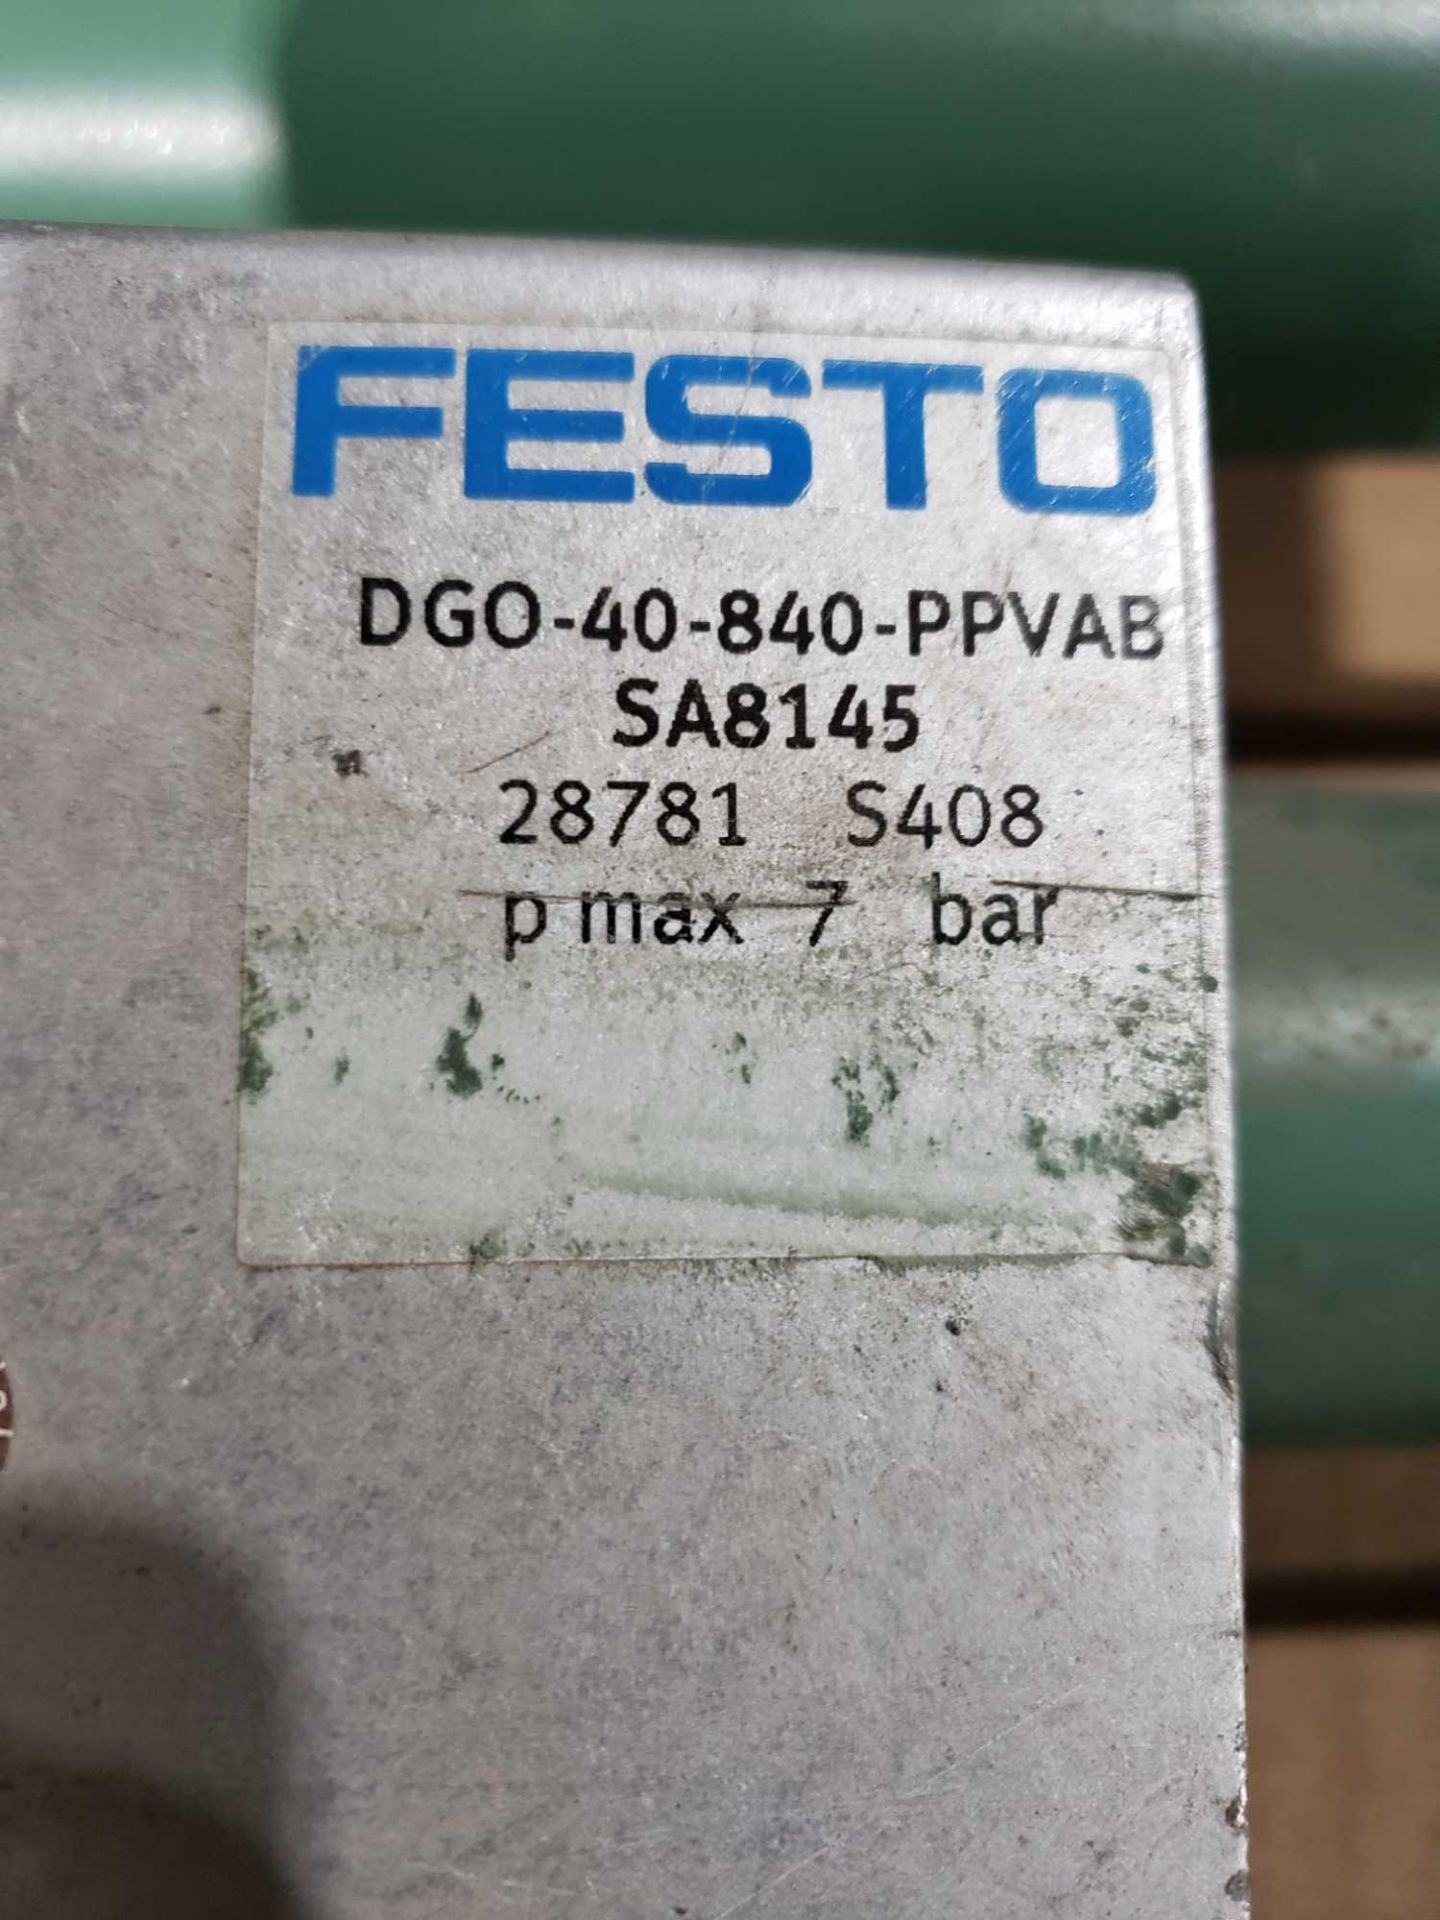 Qty 2 - Festo linear slide model DGO-40-840-PPV-AB. - Image 2 of 2